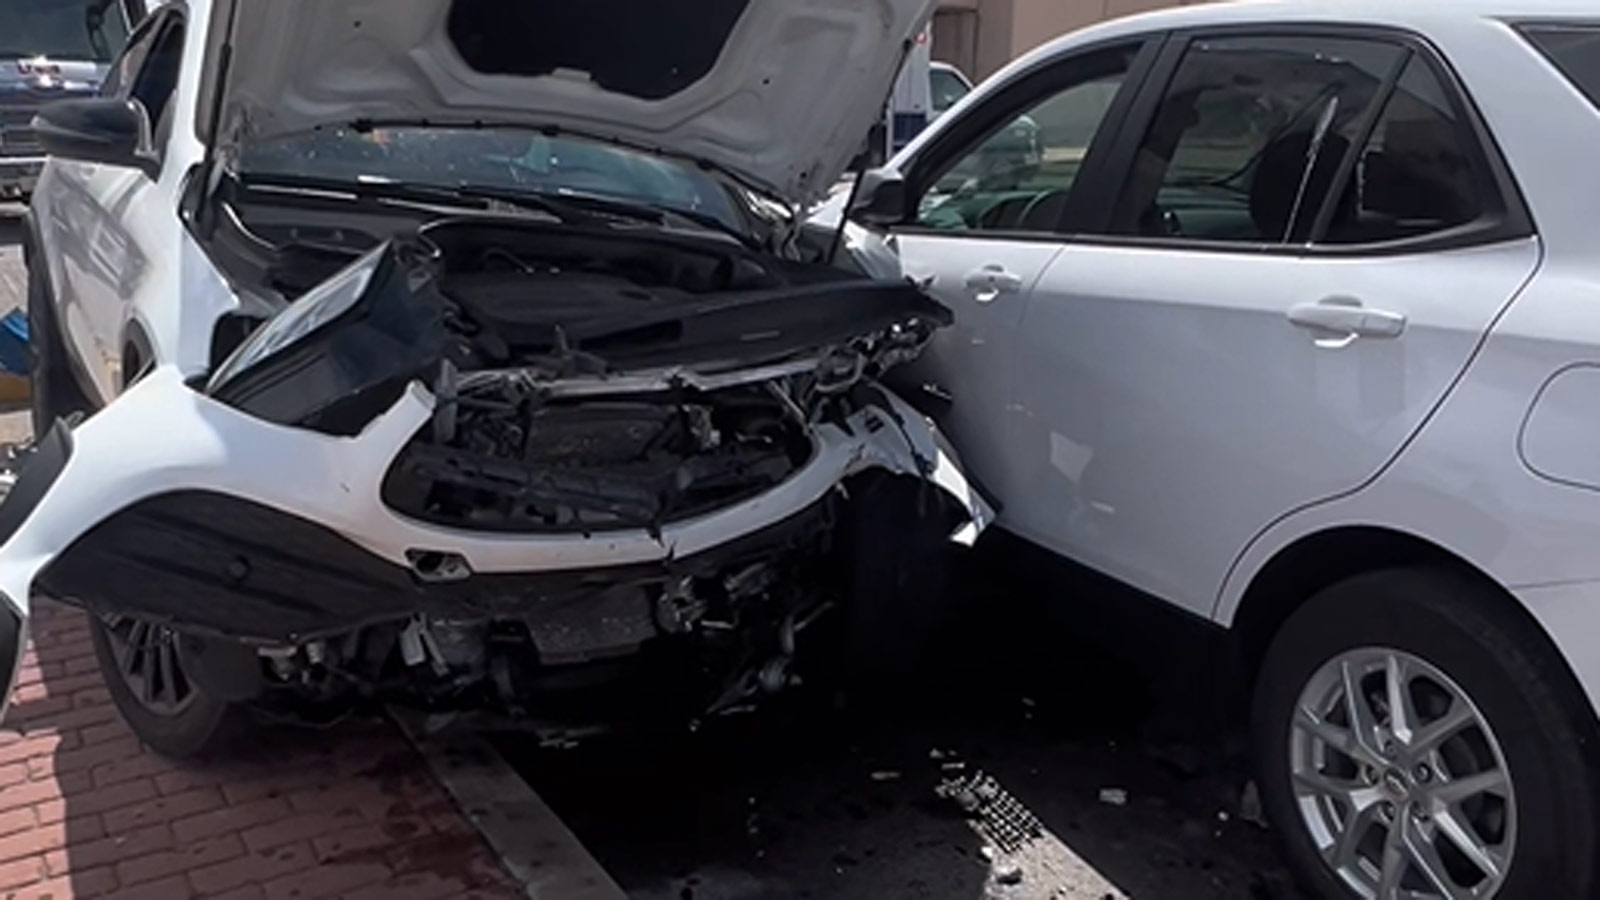 Multivehicle crash in Scottsdale causes injuries, road closure